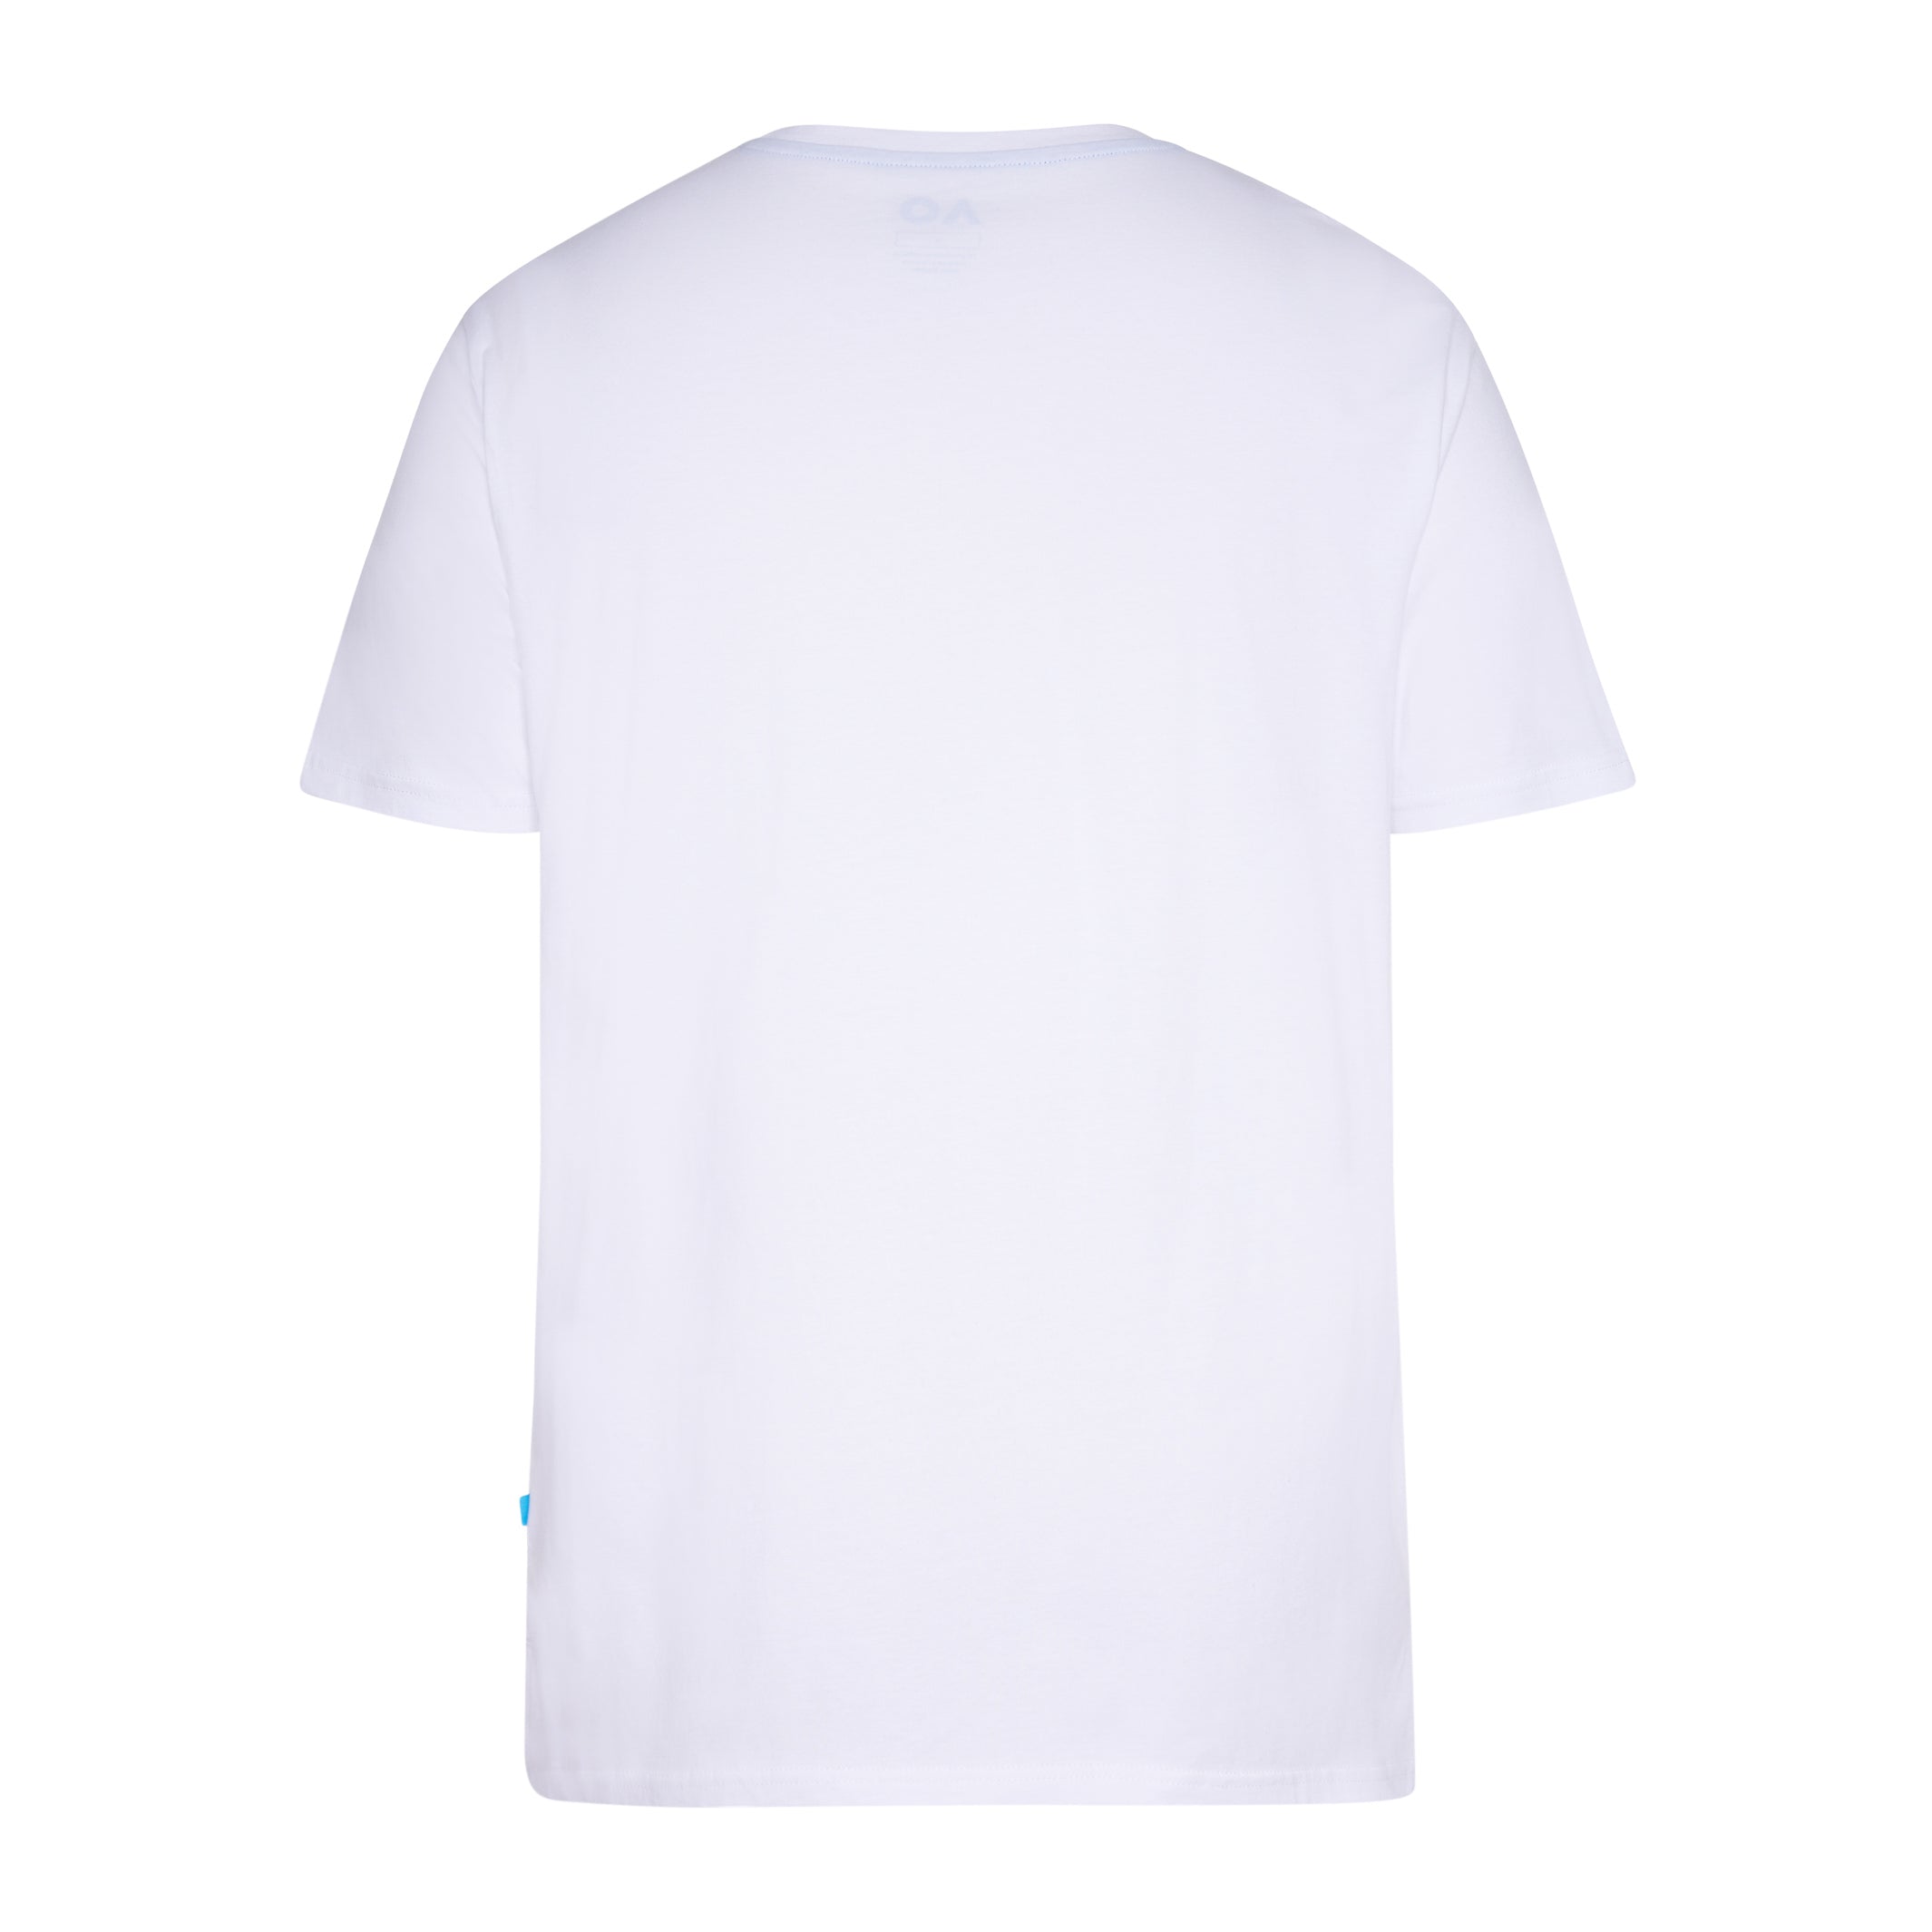 Men's White T-Shirt AO Pride Back View